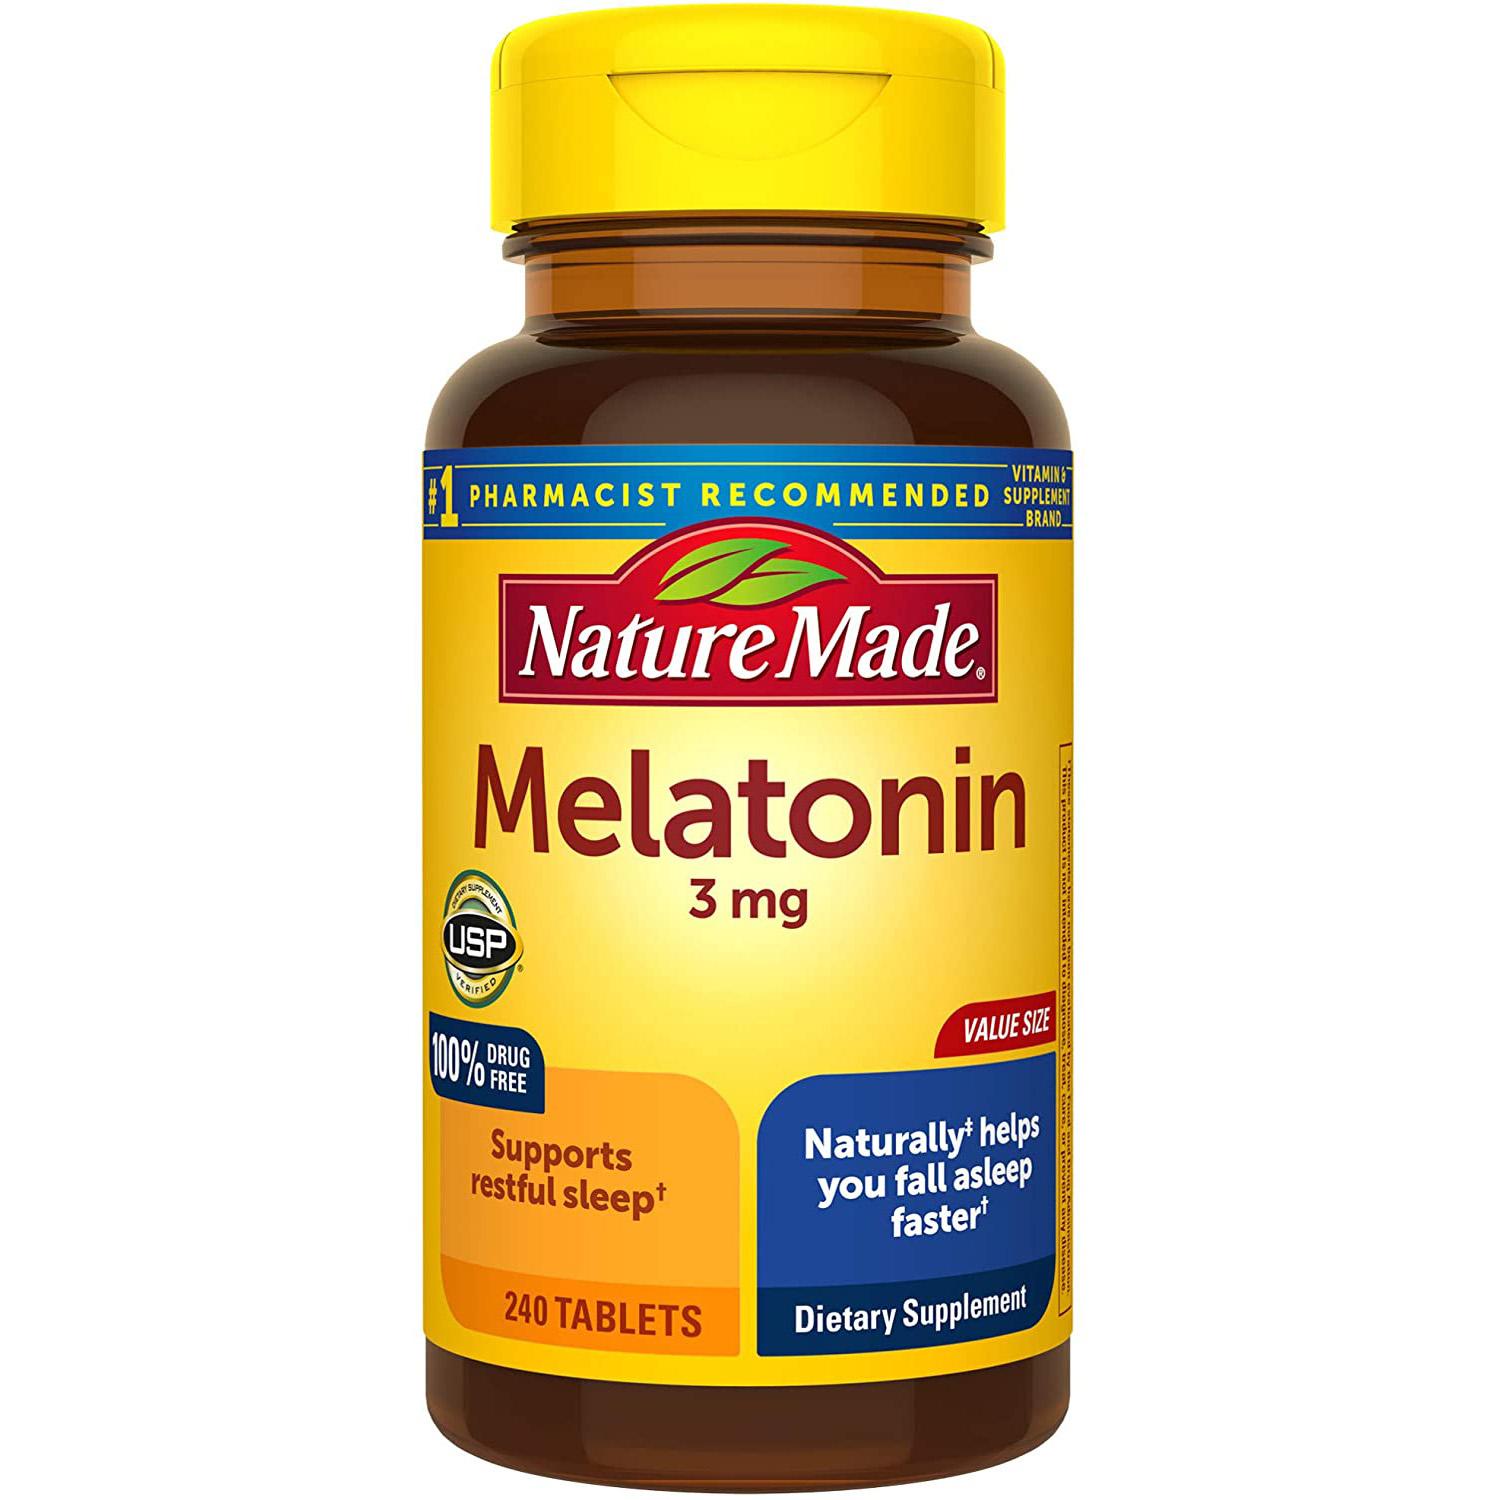 240 Nature Made Melatonin 3mg Sleeping Aid Tablets for $7.59 Shipped